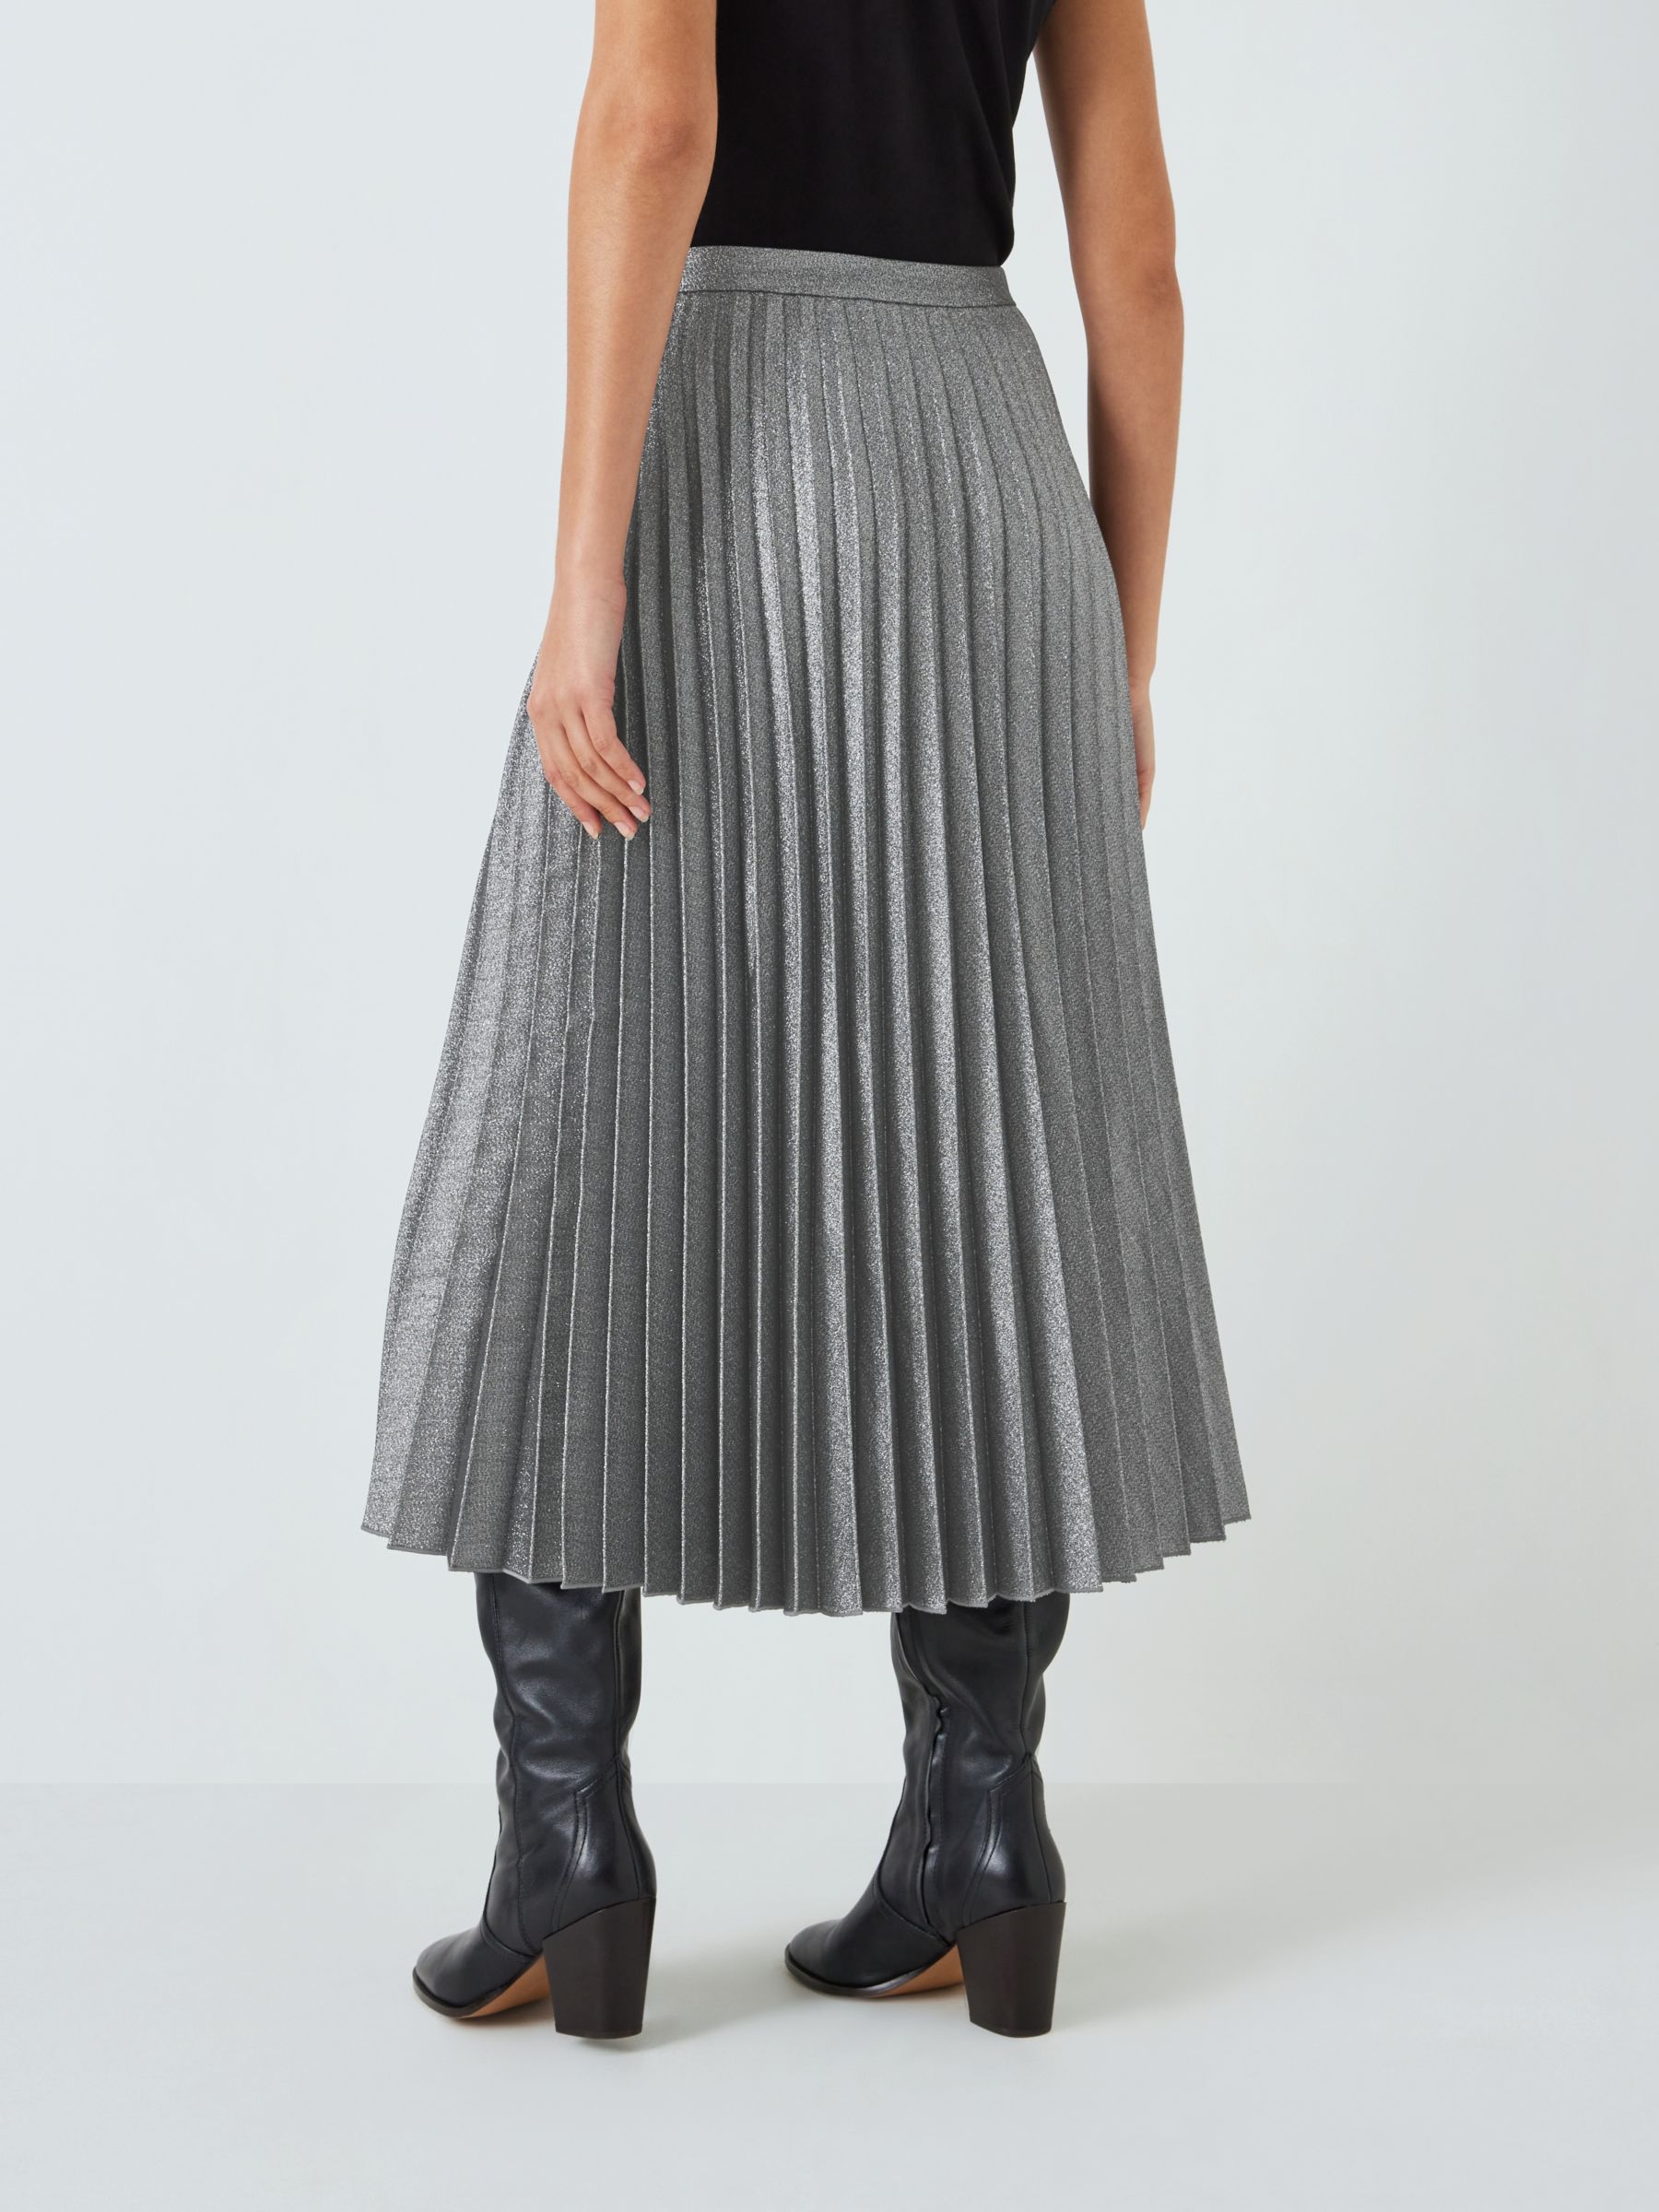 John Lewis Metallic Pleated Skirt, Black/Silver